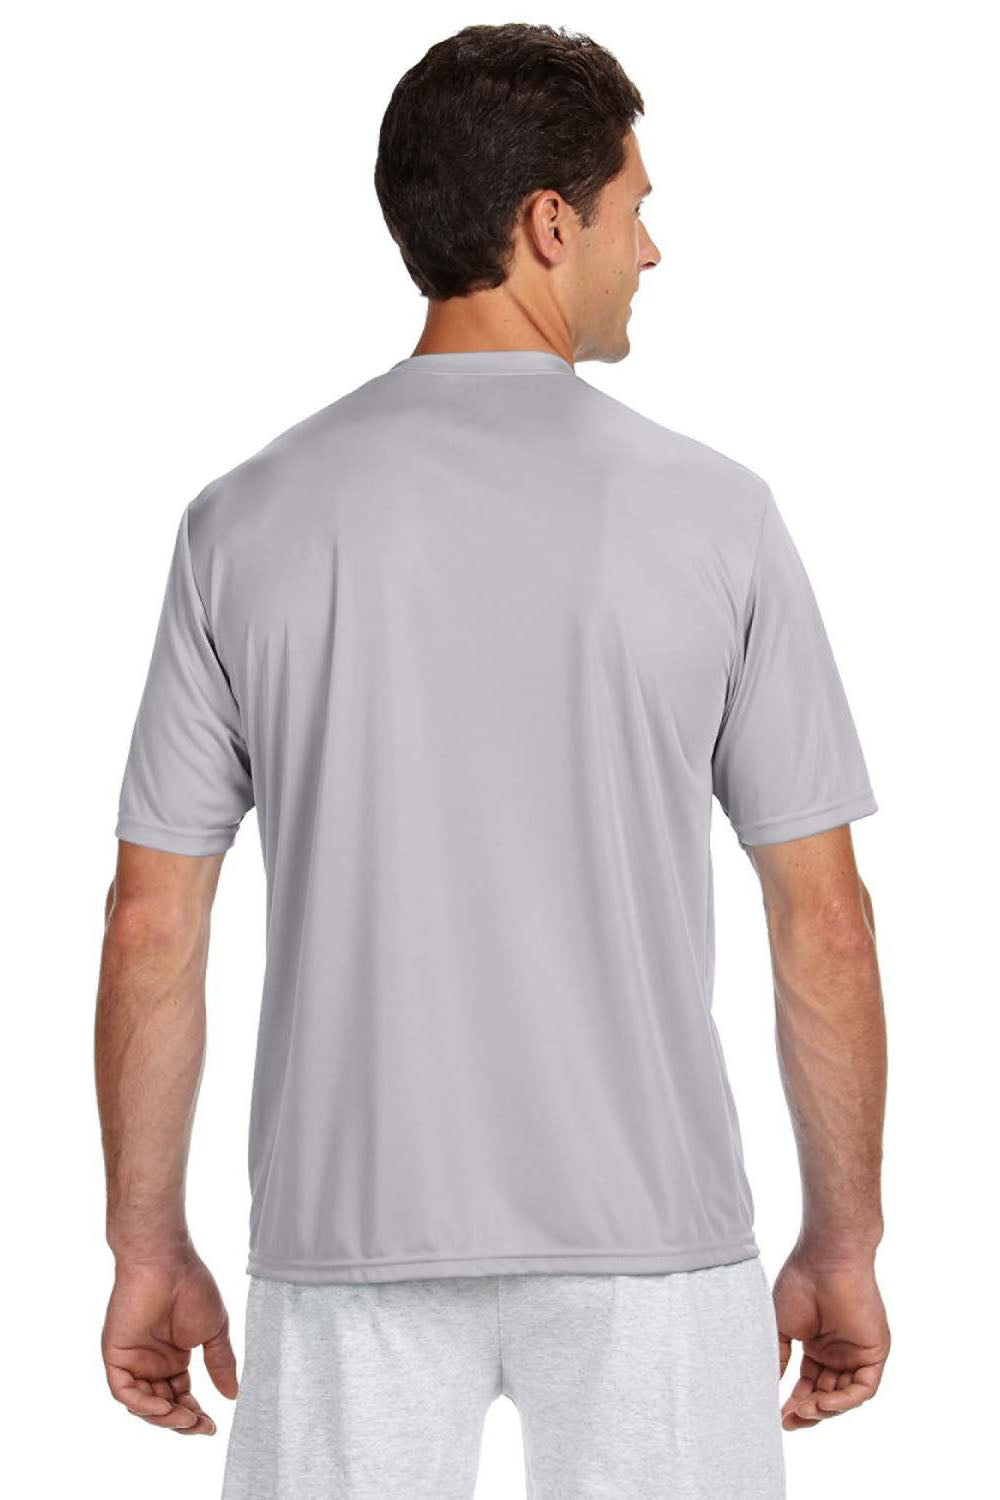 A4 N3142 Mens Performance Moisture Wicking Short Sleeve Crewneck T-Shirt Silver Grey Model Back